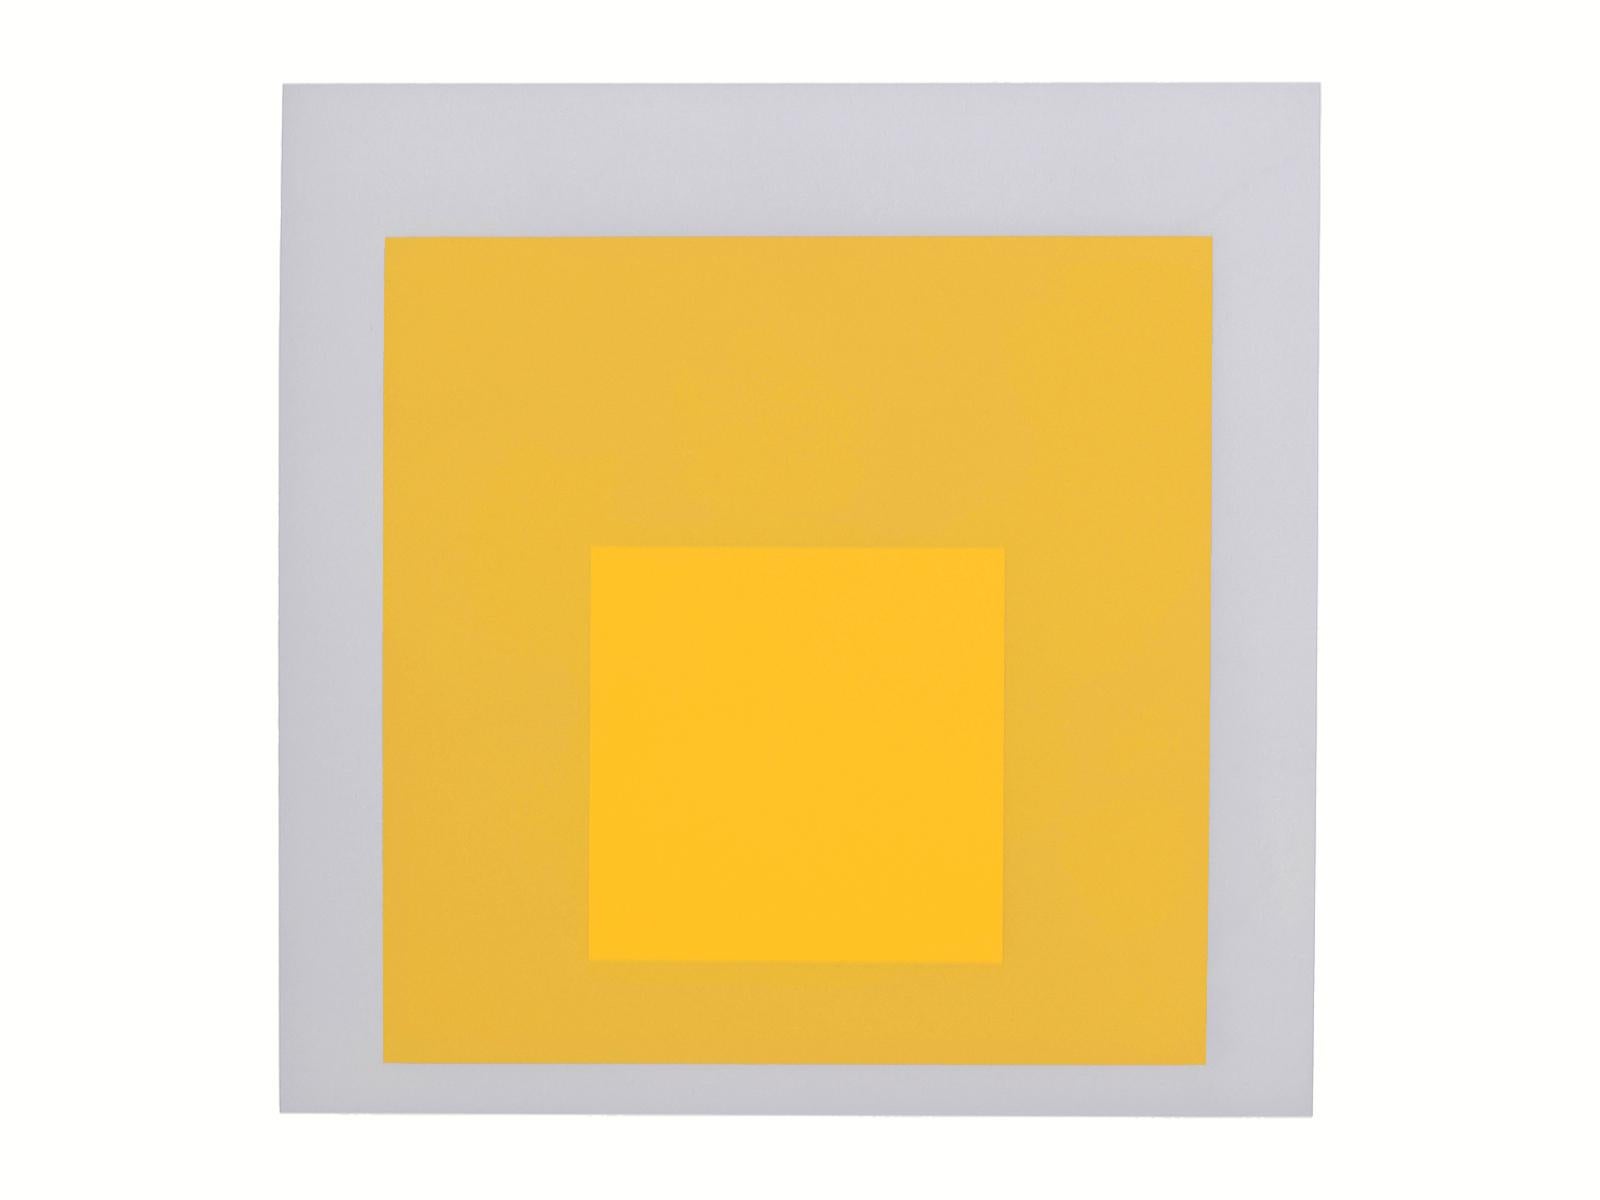 Josef Albers Abstract Print - Formulation : Articulation Portfolio II Folder 4 (B) "Homage to the Square"